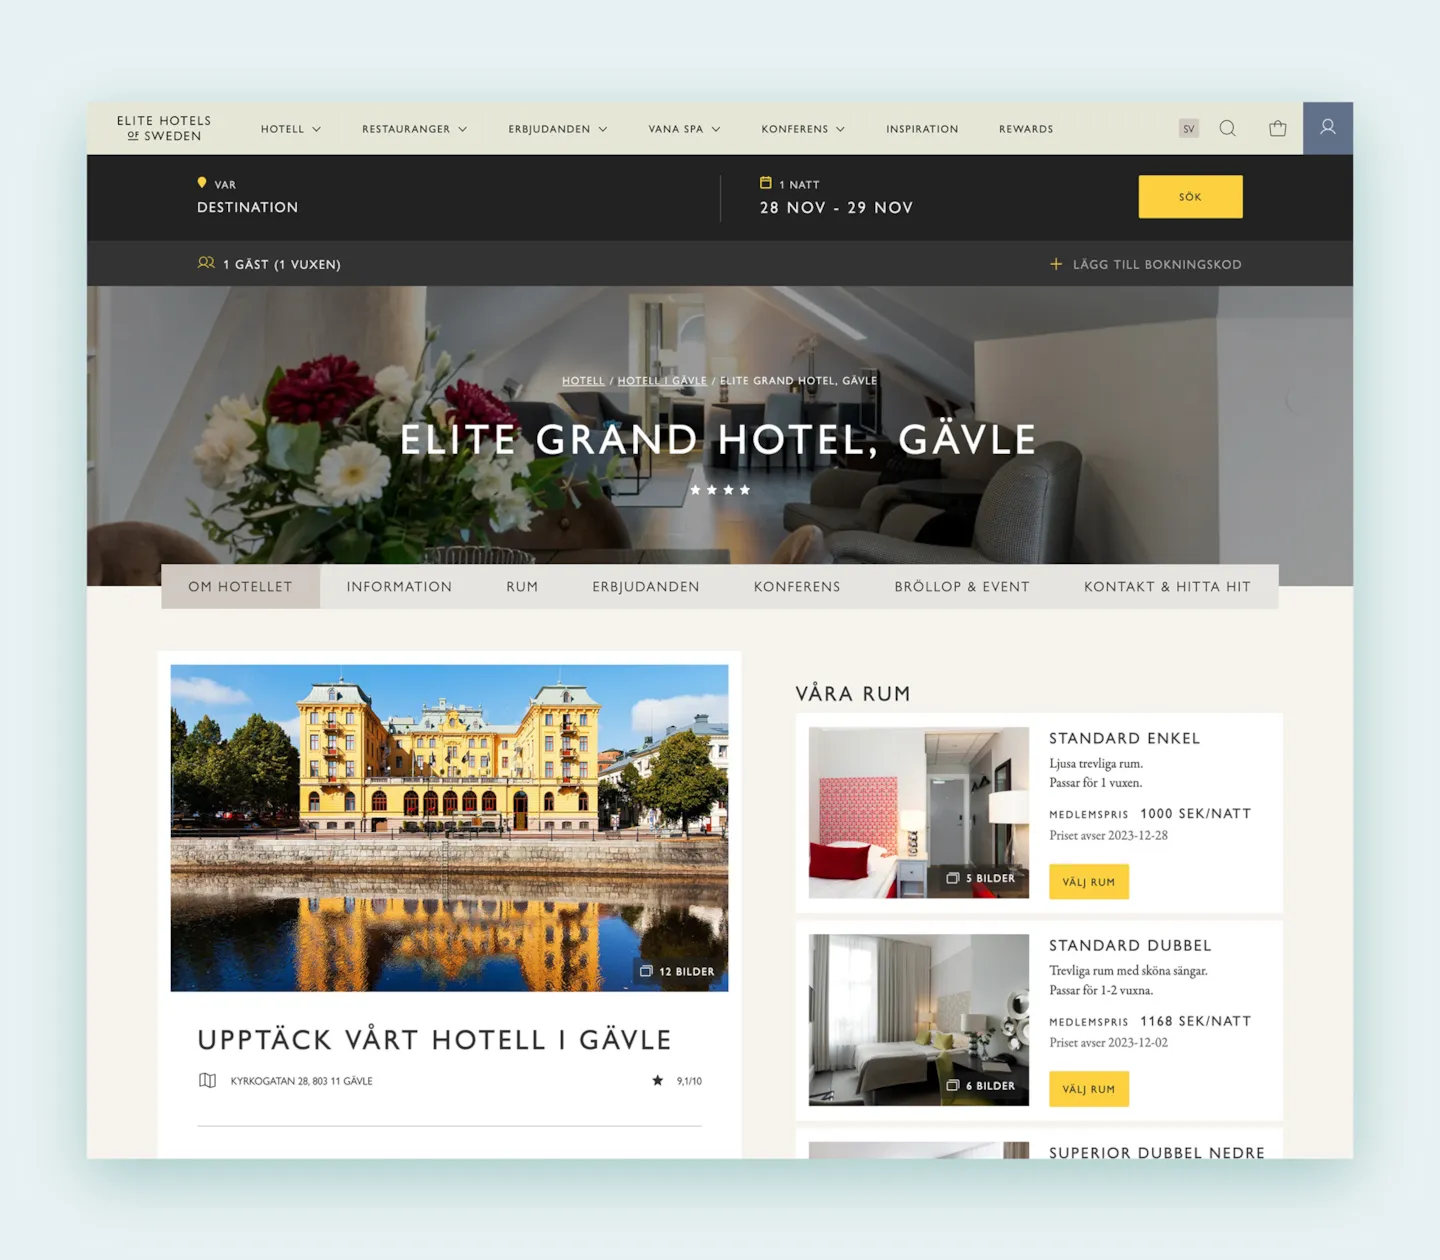 Elite Hotels' new website